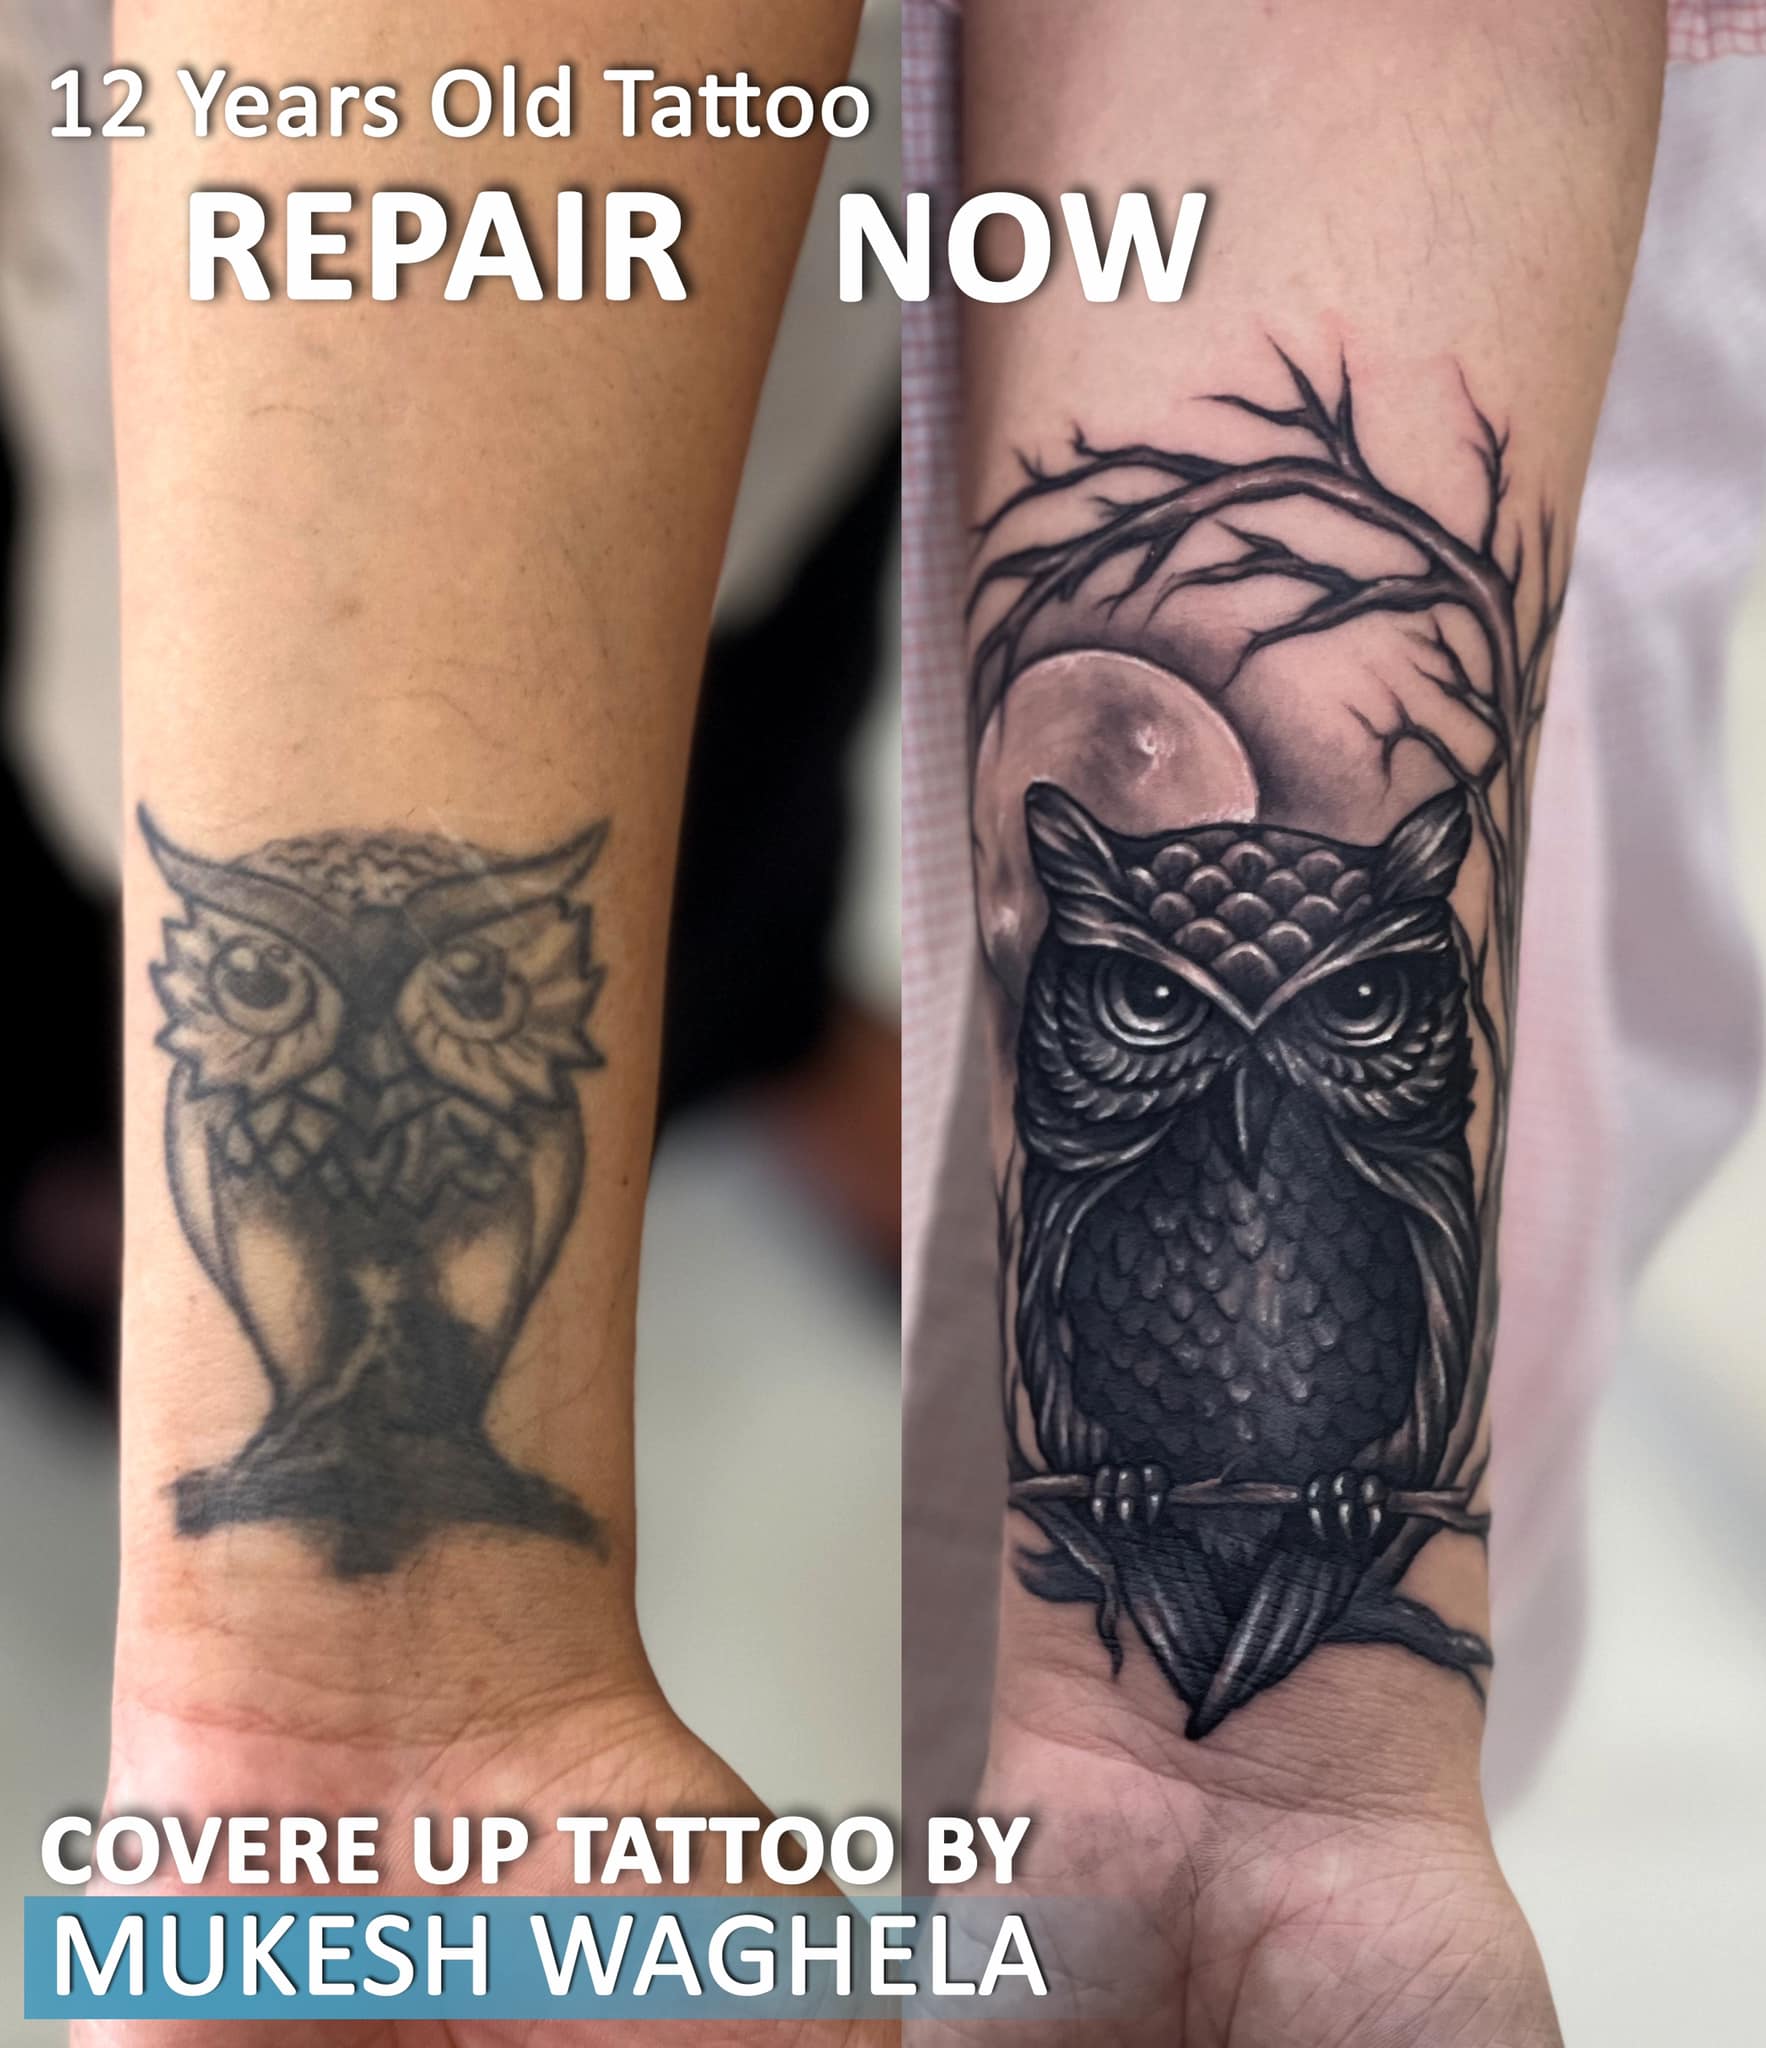 owls tattoos